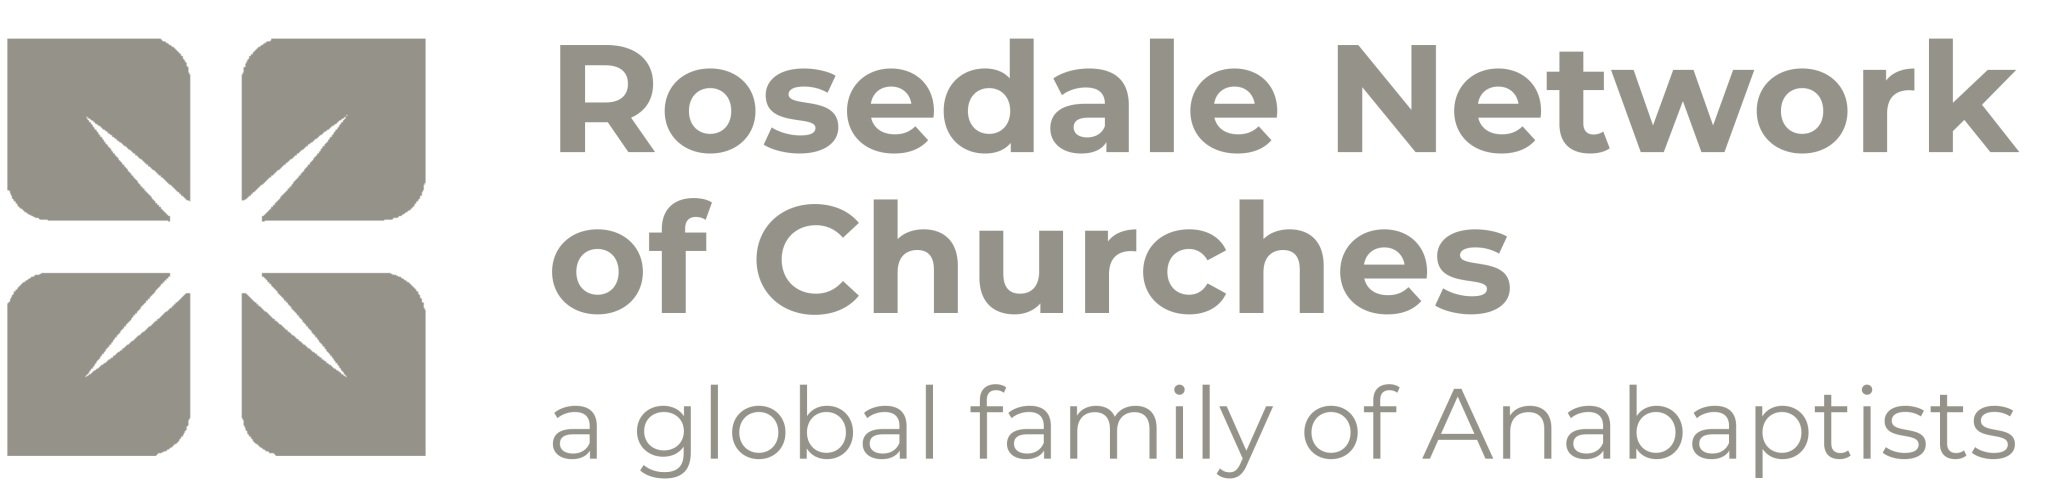 Rosedale-Network-of-Churches-Website5.jpg